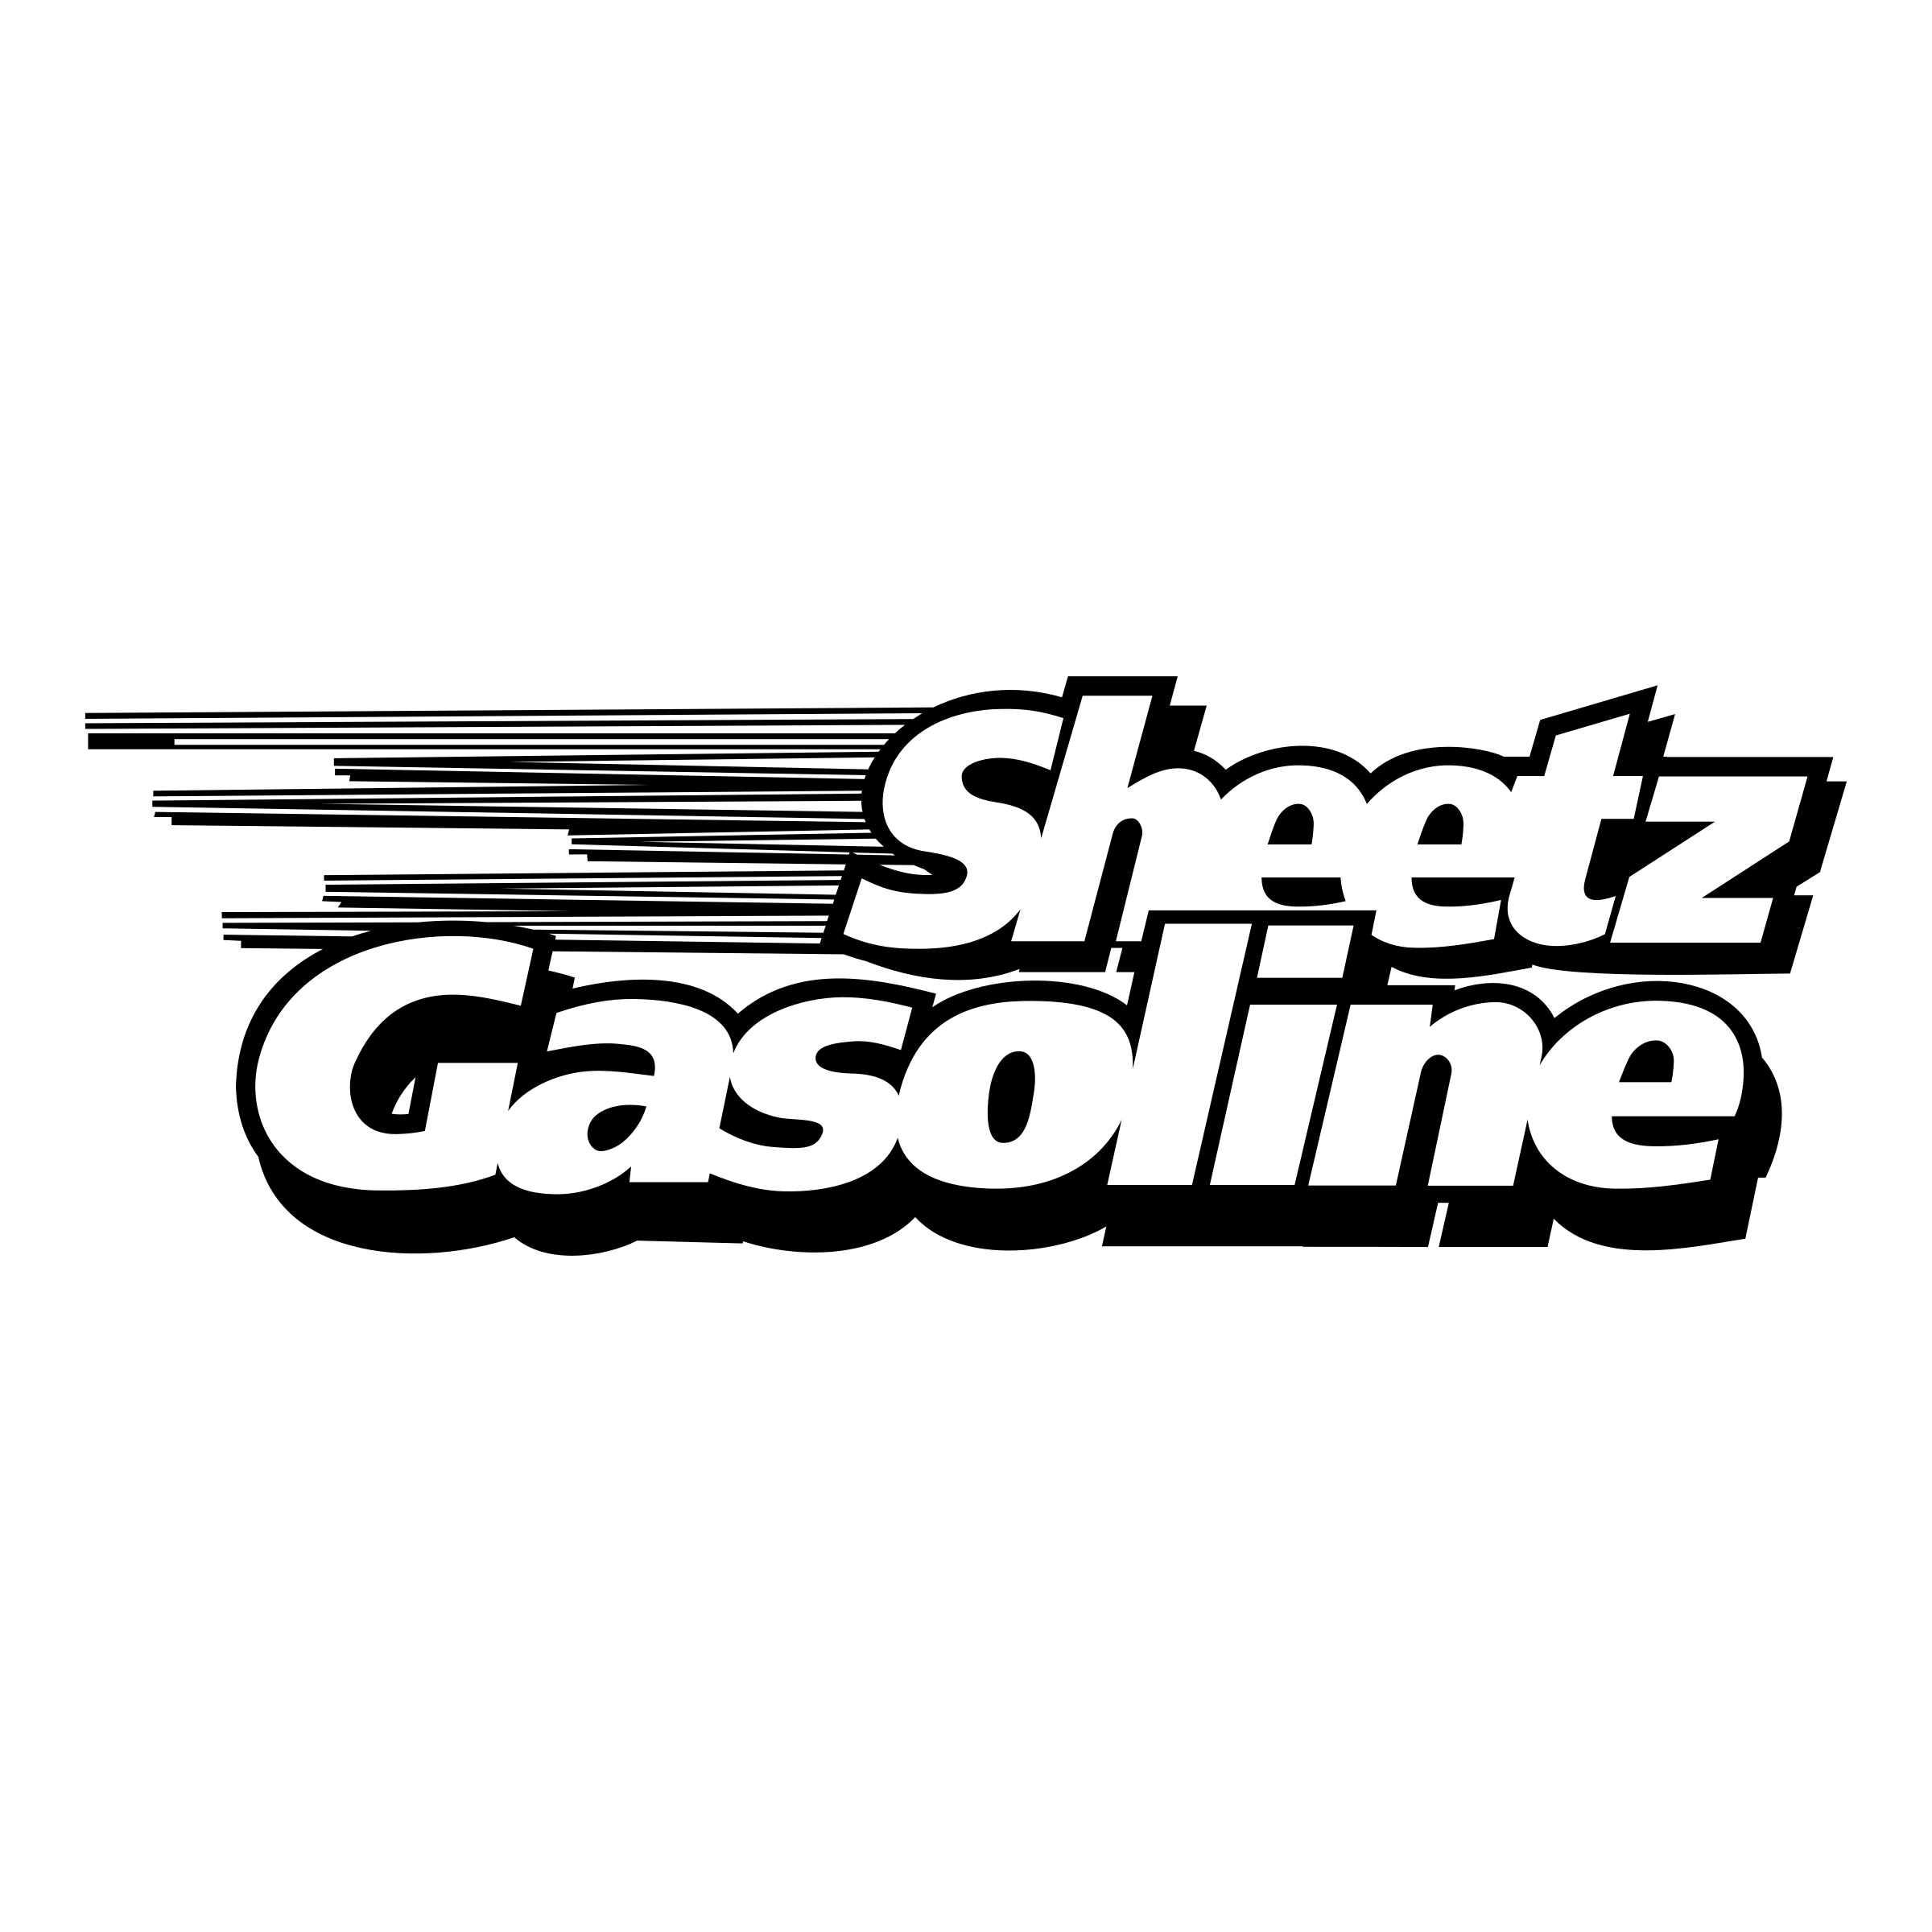 Sheetz Logo - Sheetz Gasoline Logo PNG Transparent & SVG Vector